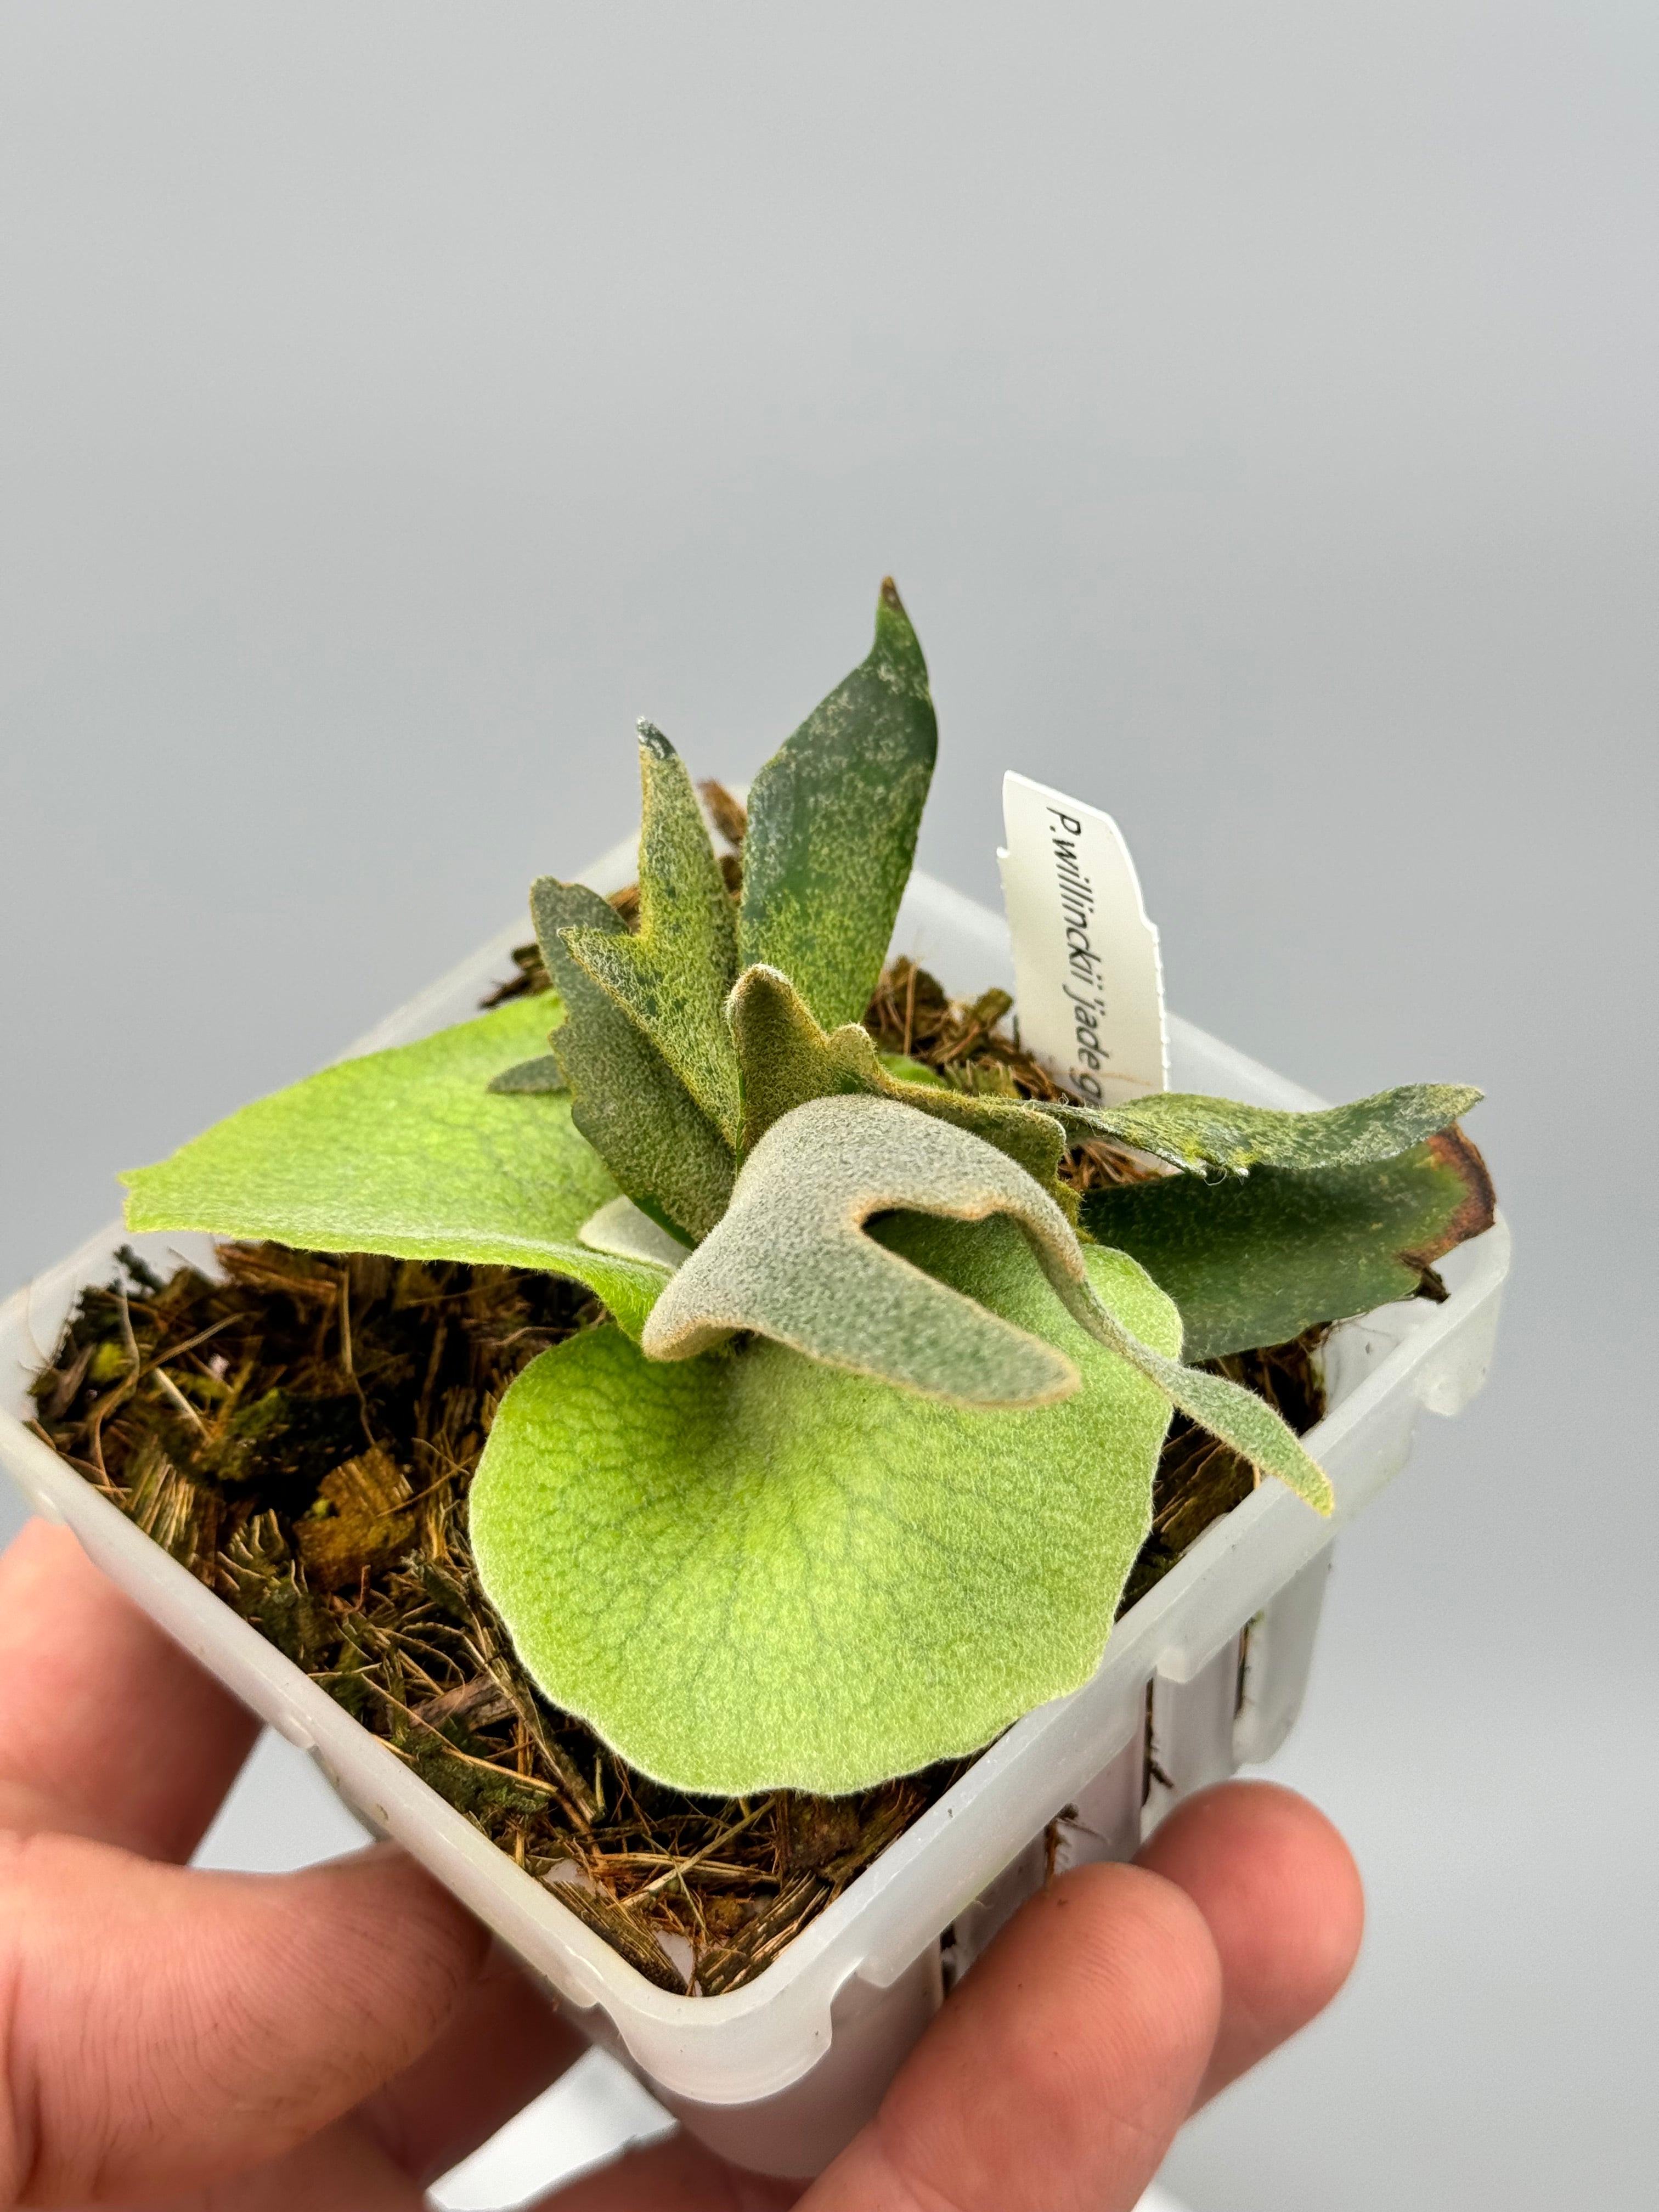 Platycerium willinckii "Jade Girl" (Medium Size)